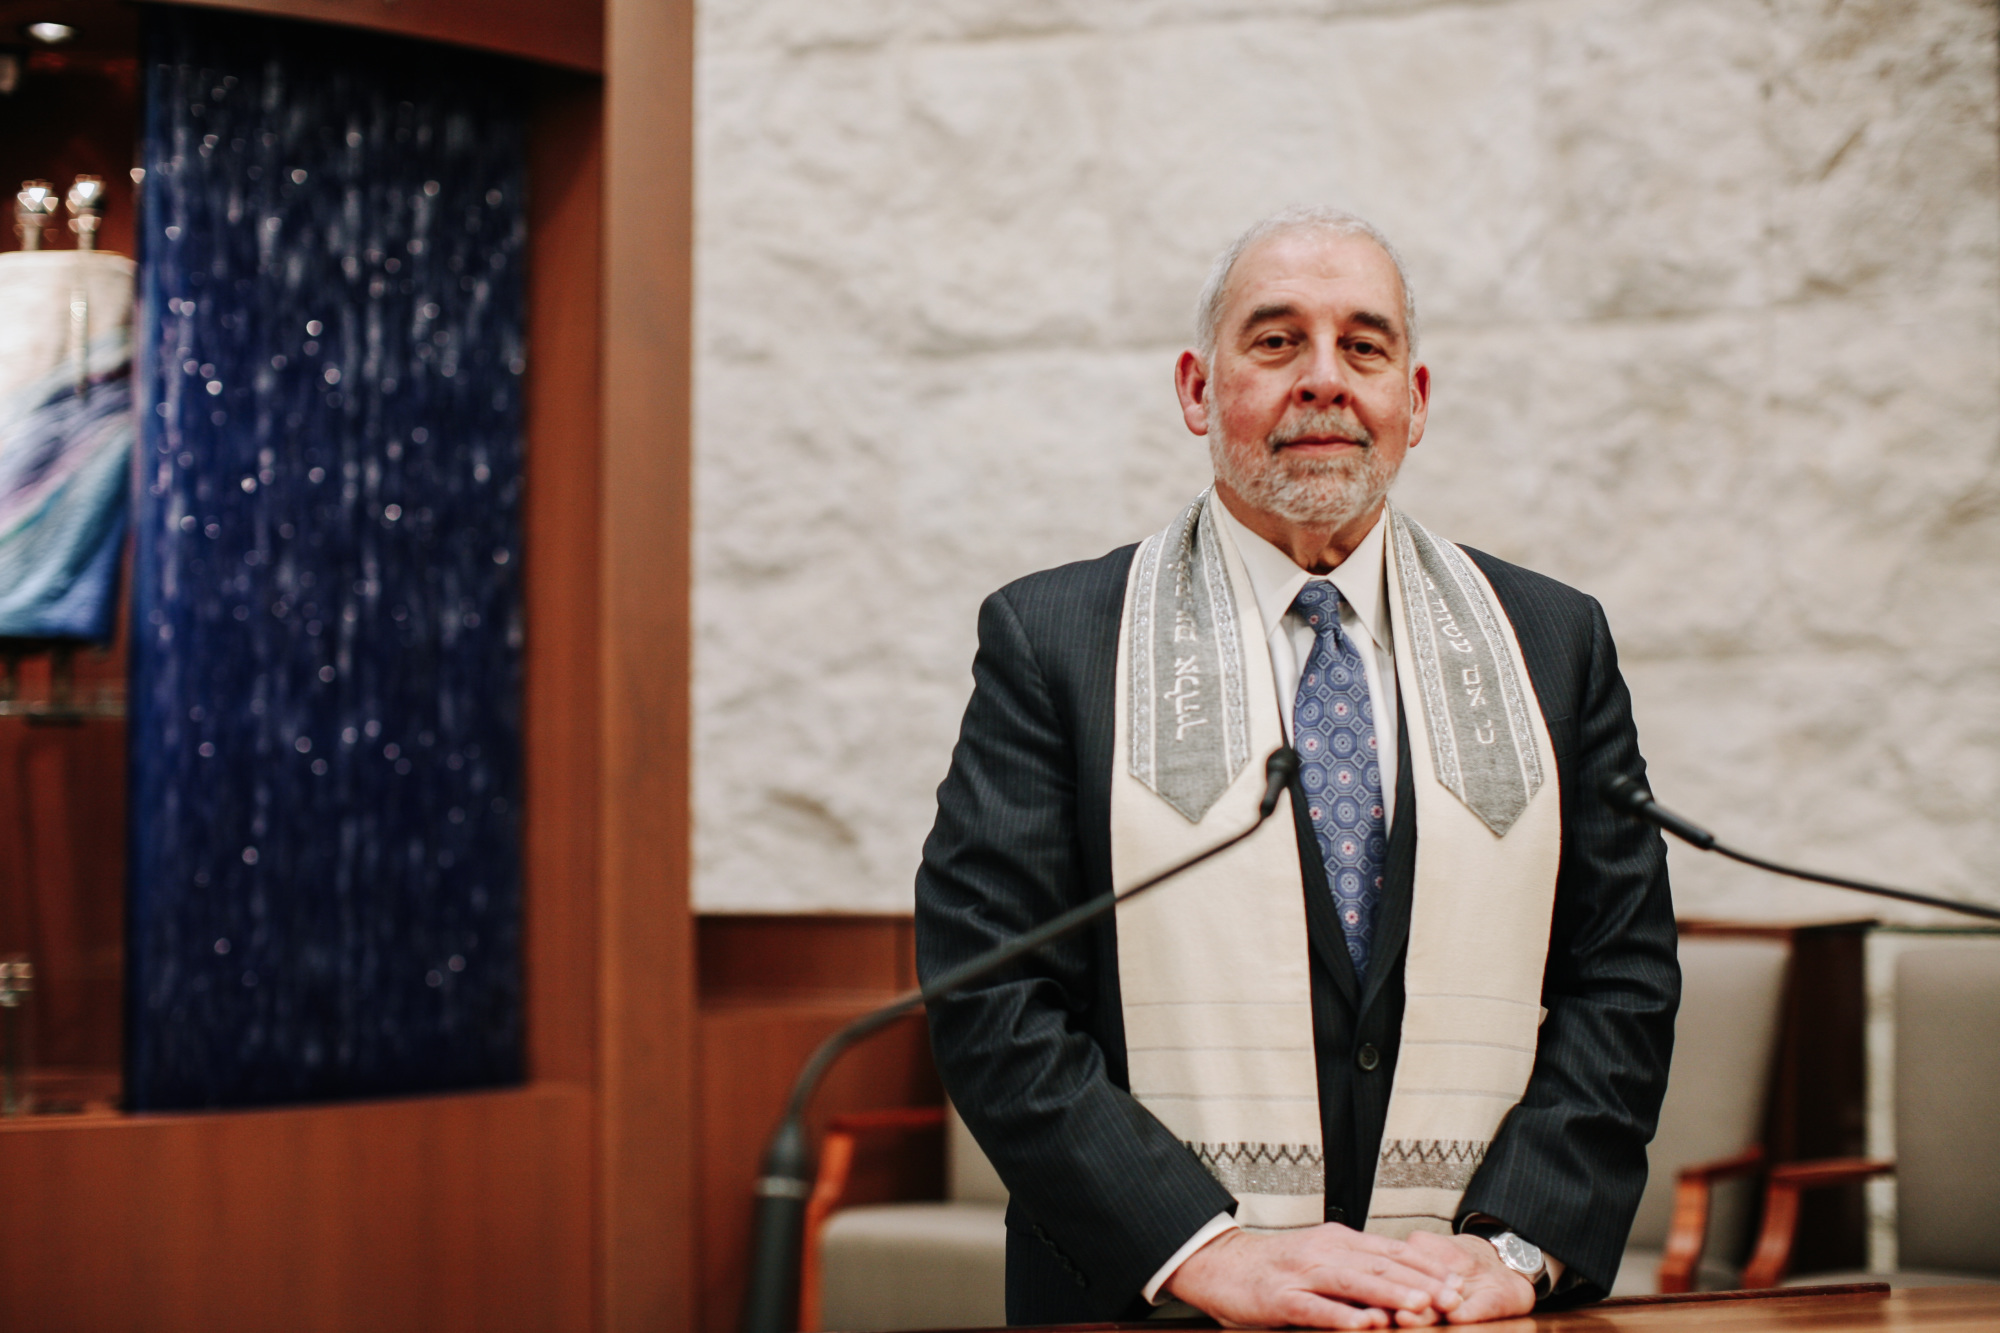 Rabbi Jim Bennett